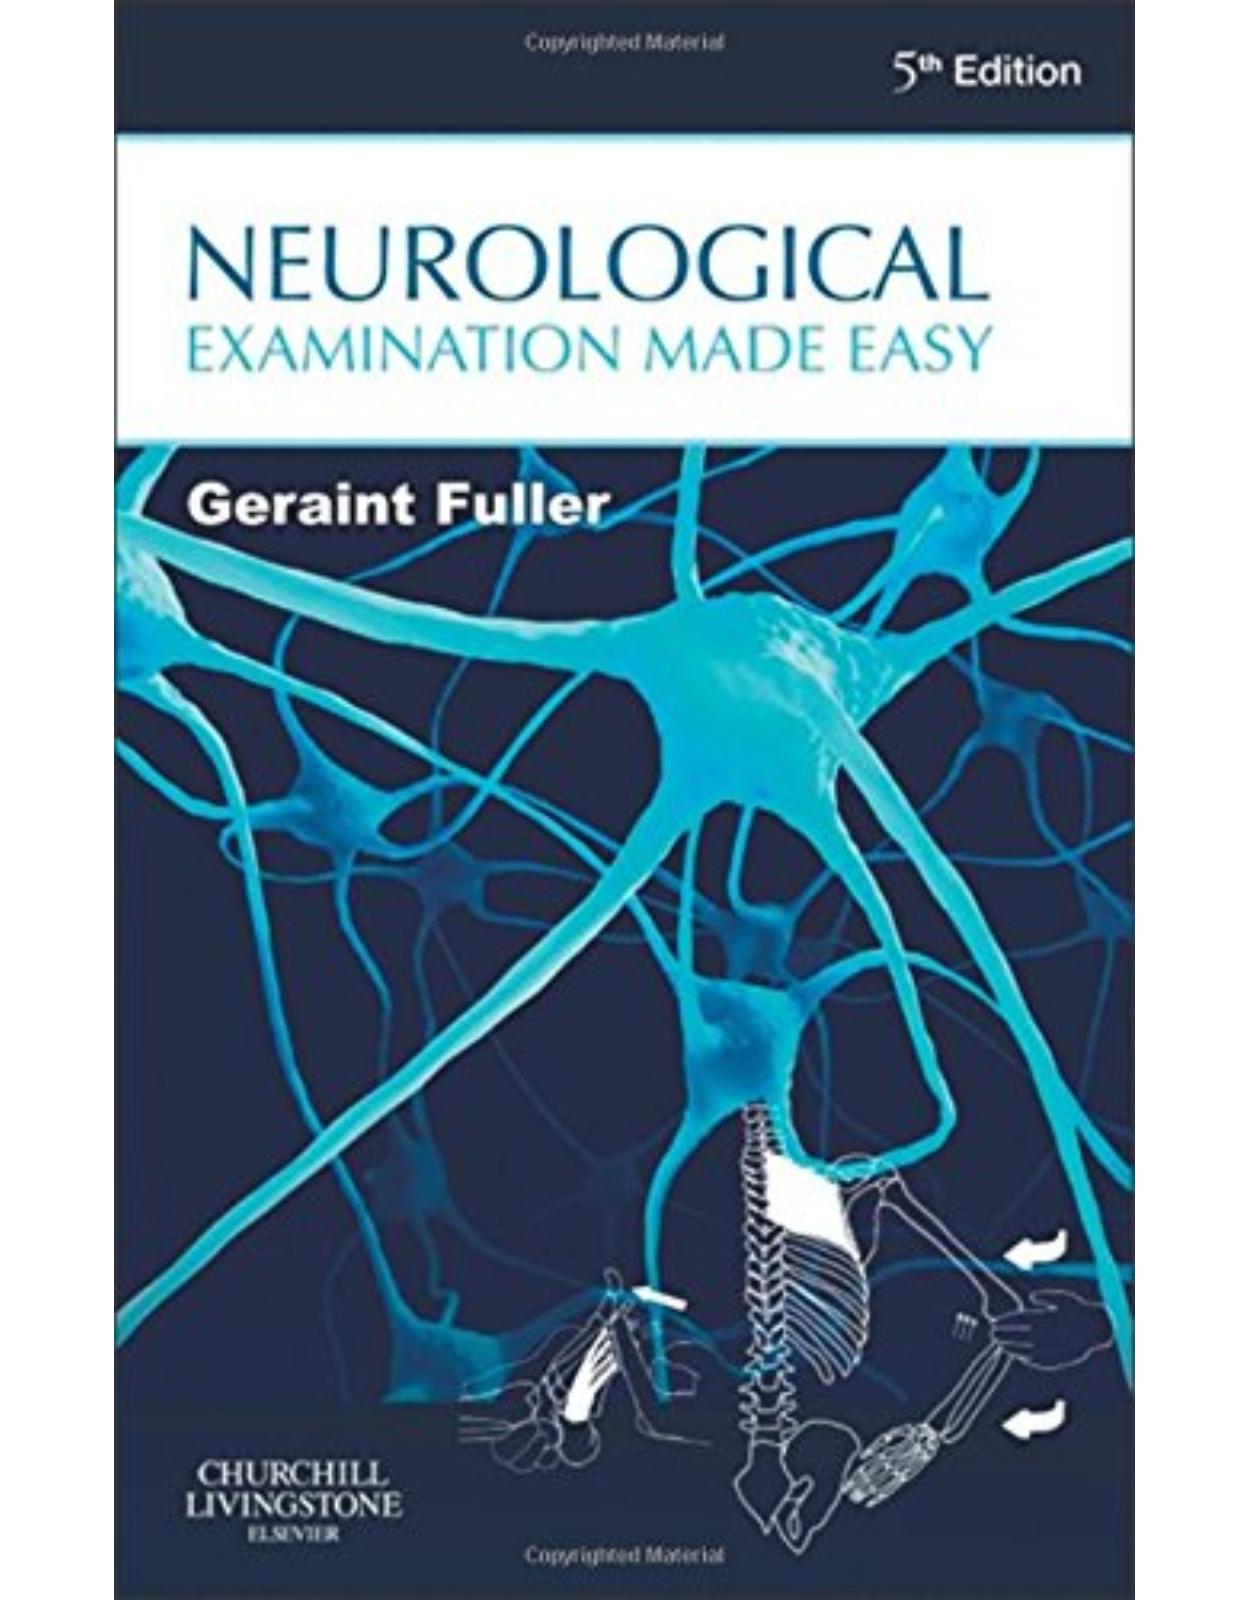 Neurological Examination Made Easy, 5th Edition